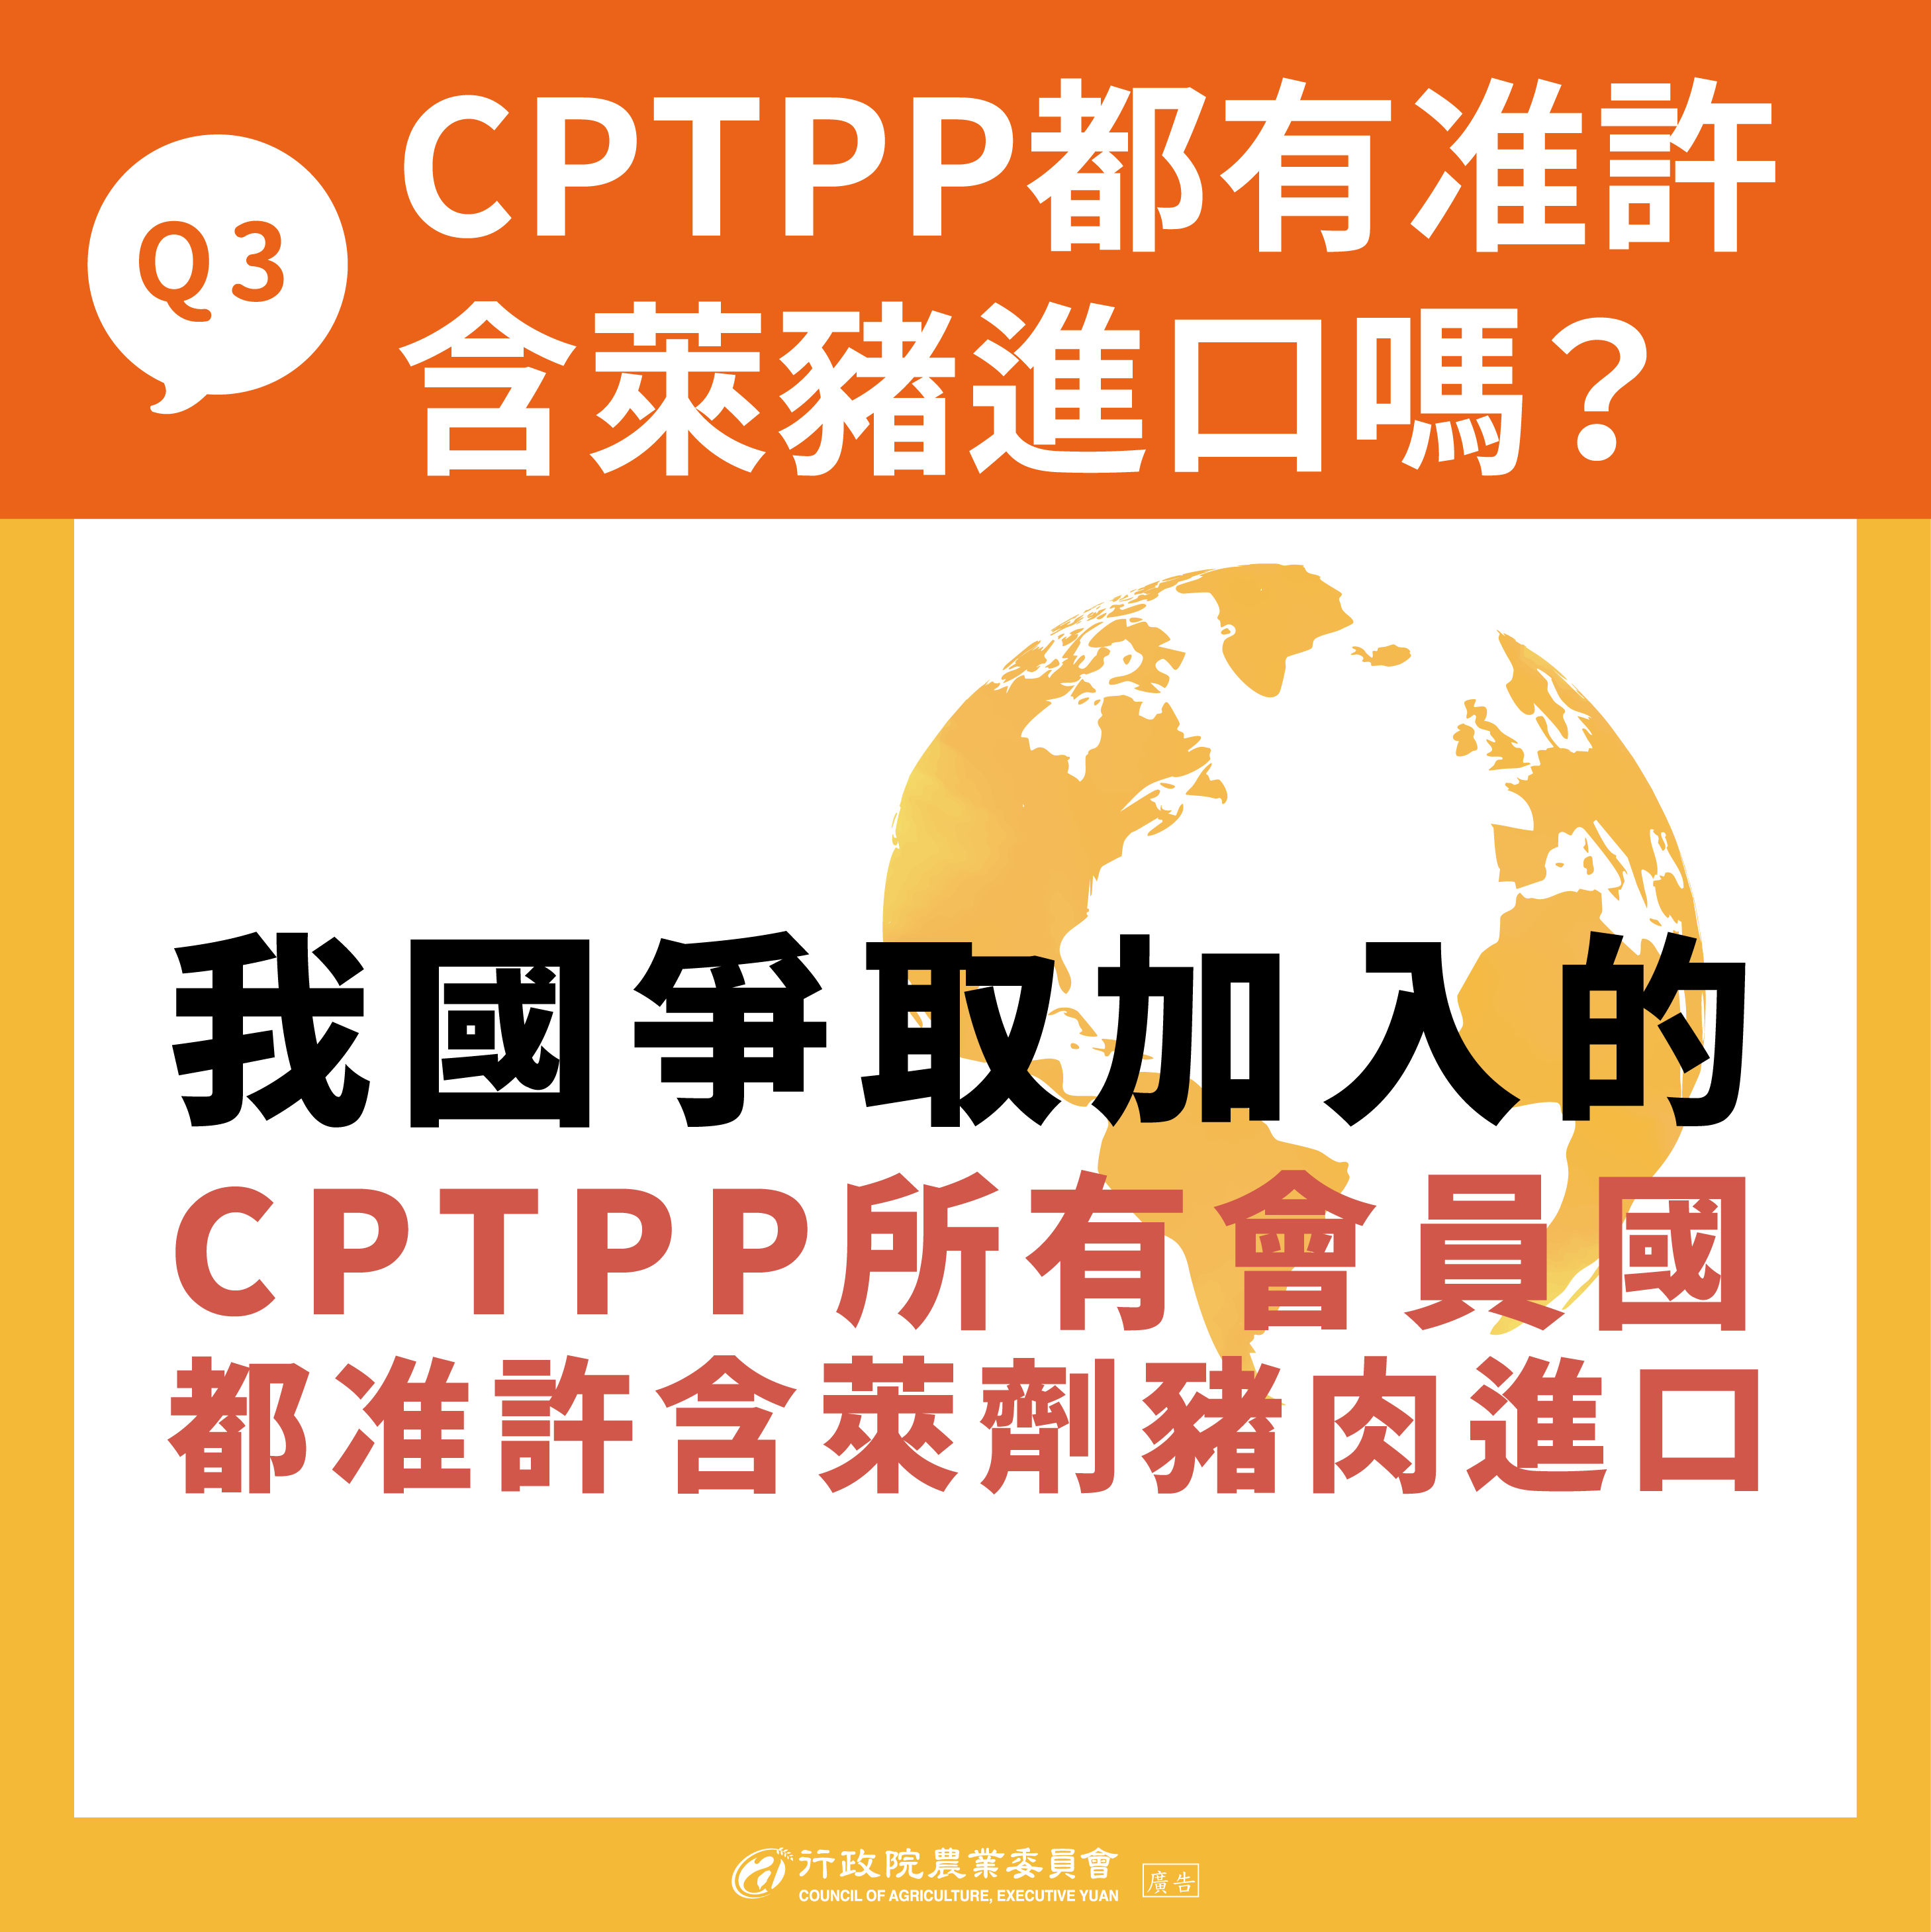 Q3：CPTPP都有准許含萊豬進口嗎？